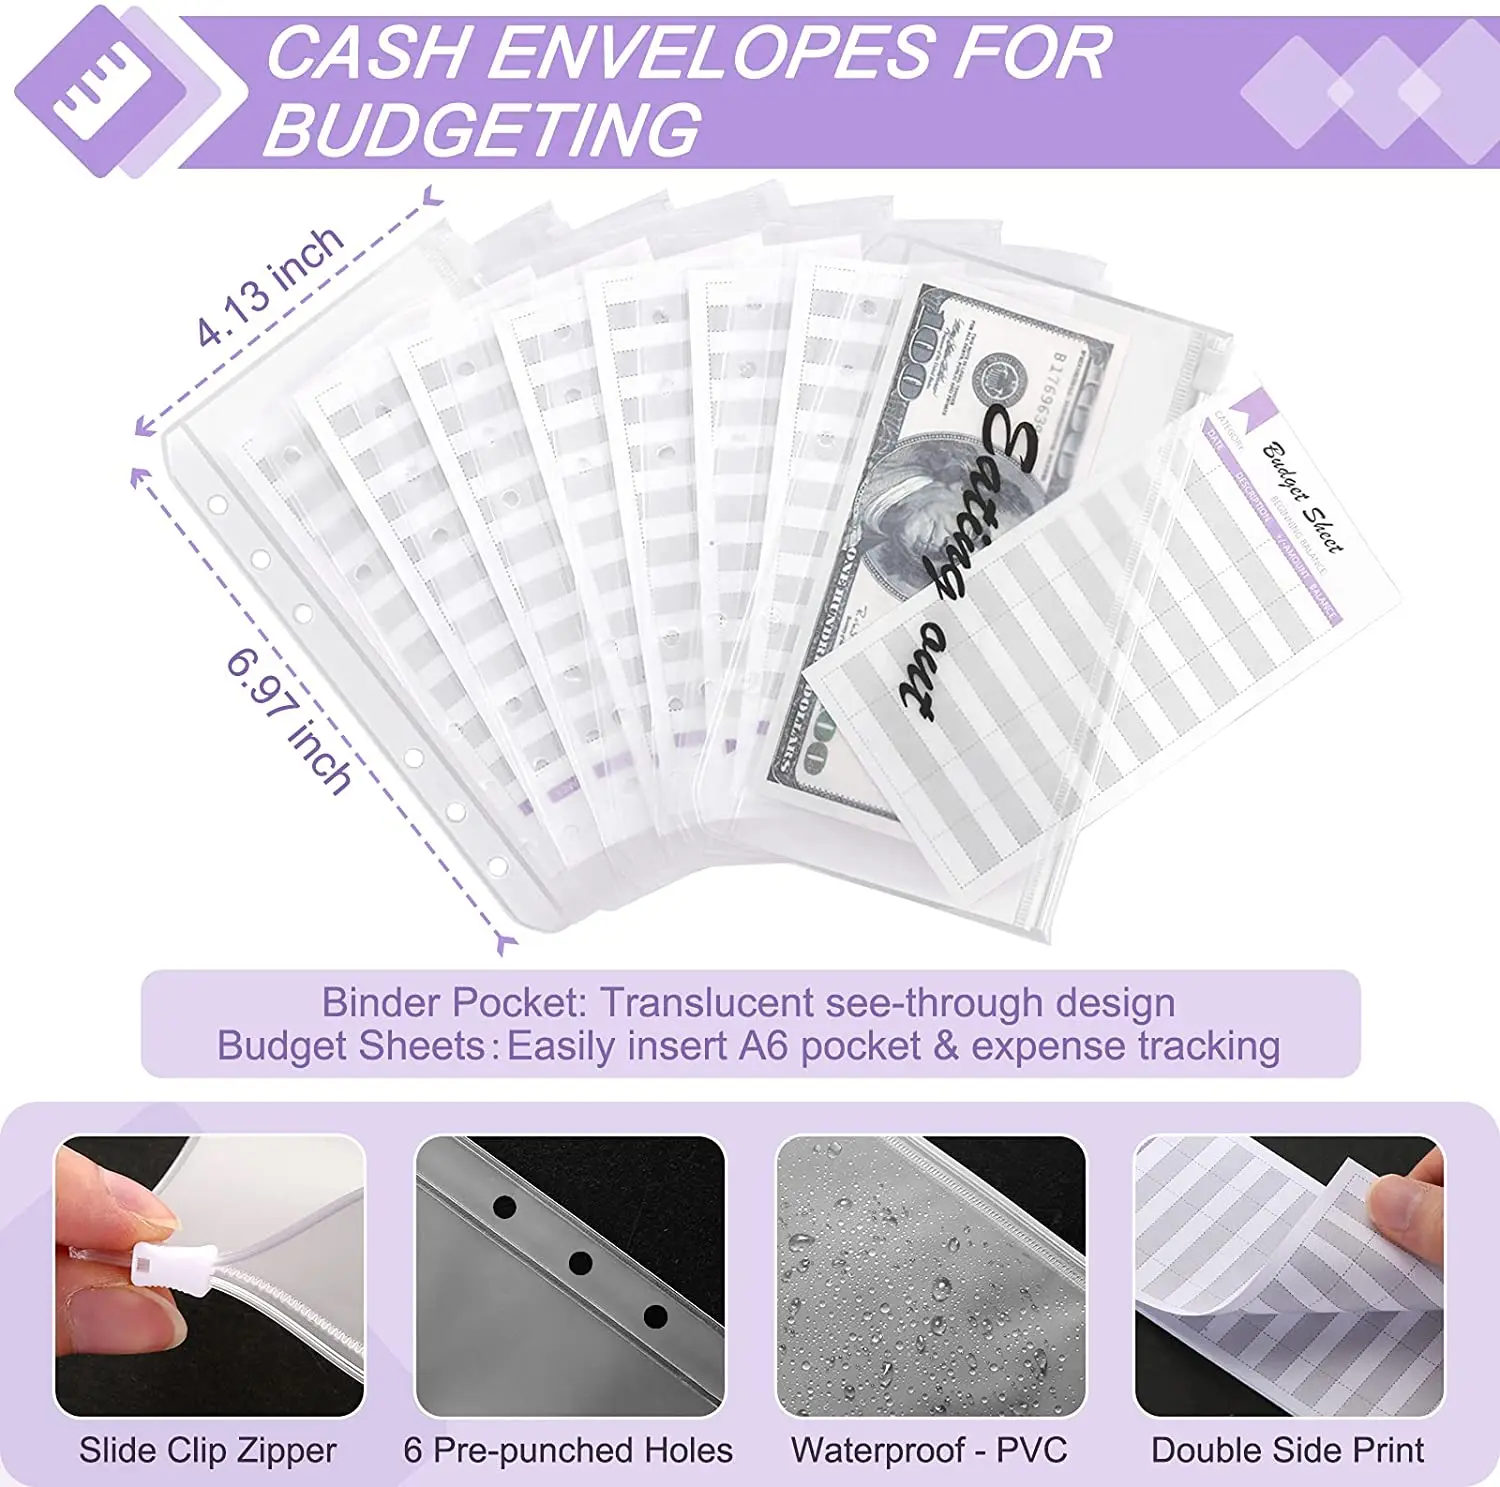 Ostrich Leather Wallet Budget Binder Cash Stuffing Envelopes Included 6 Cash Envelopes Included Binder Only A7 Cash Wallet A7 Binder